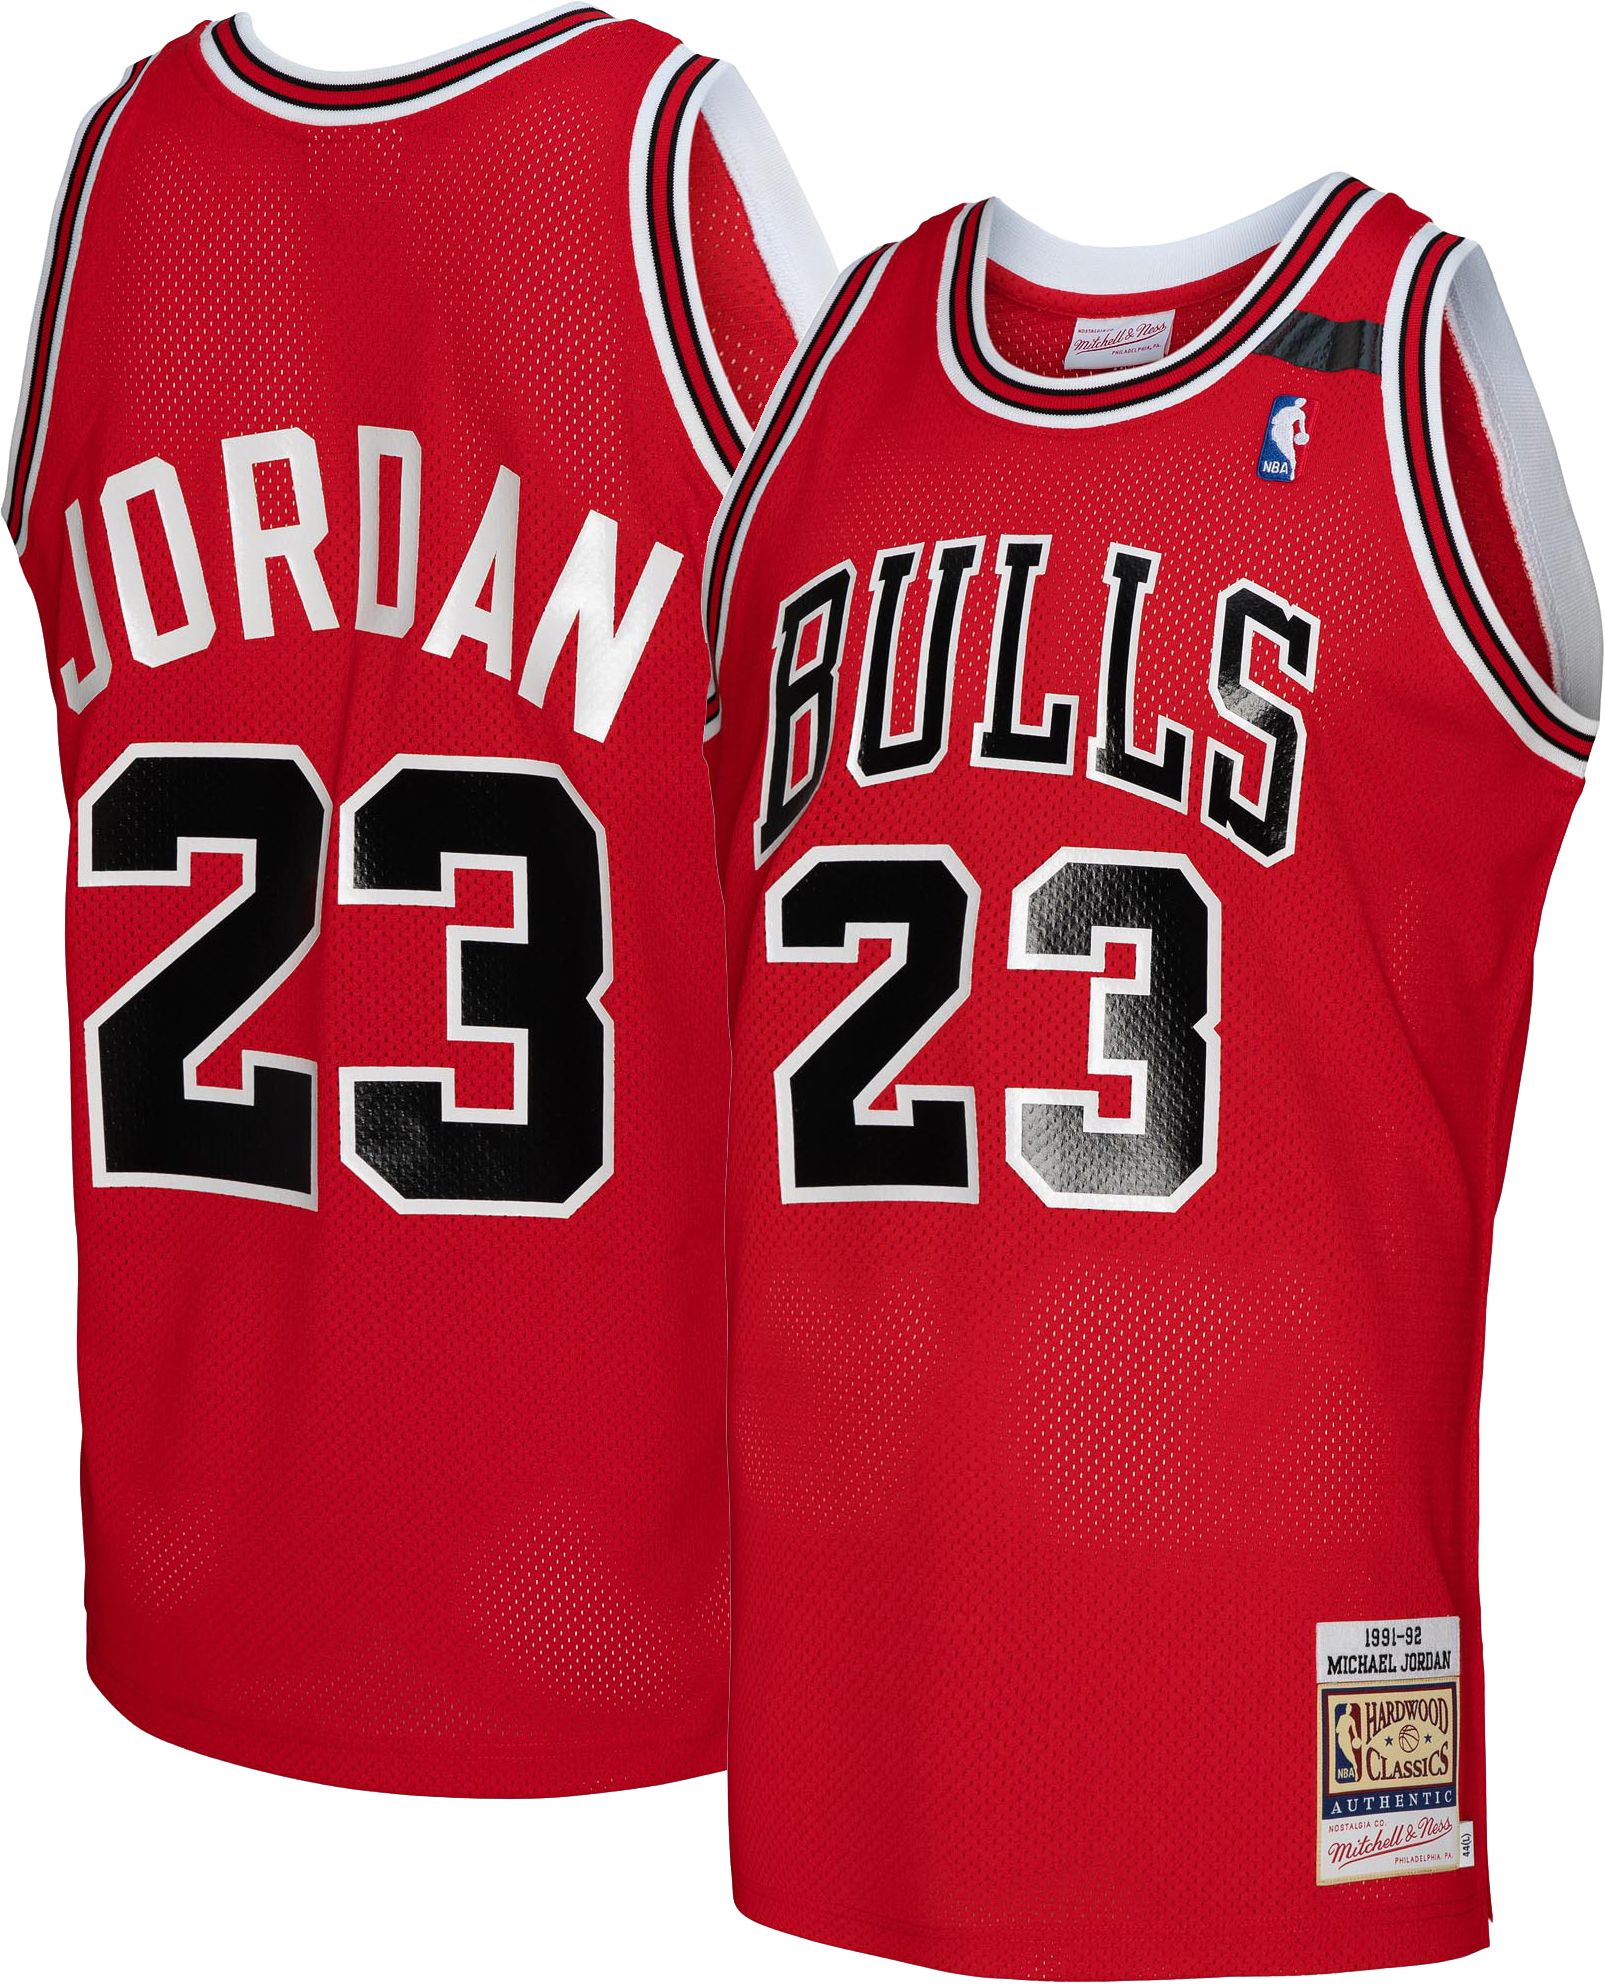 1991 Chicago Bulls Michael Jordan #23 